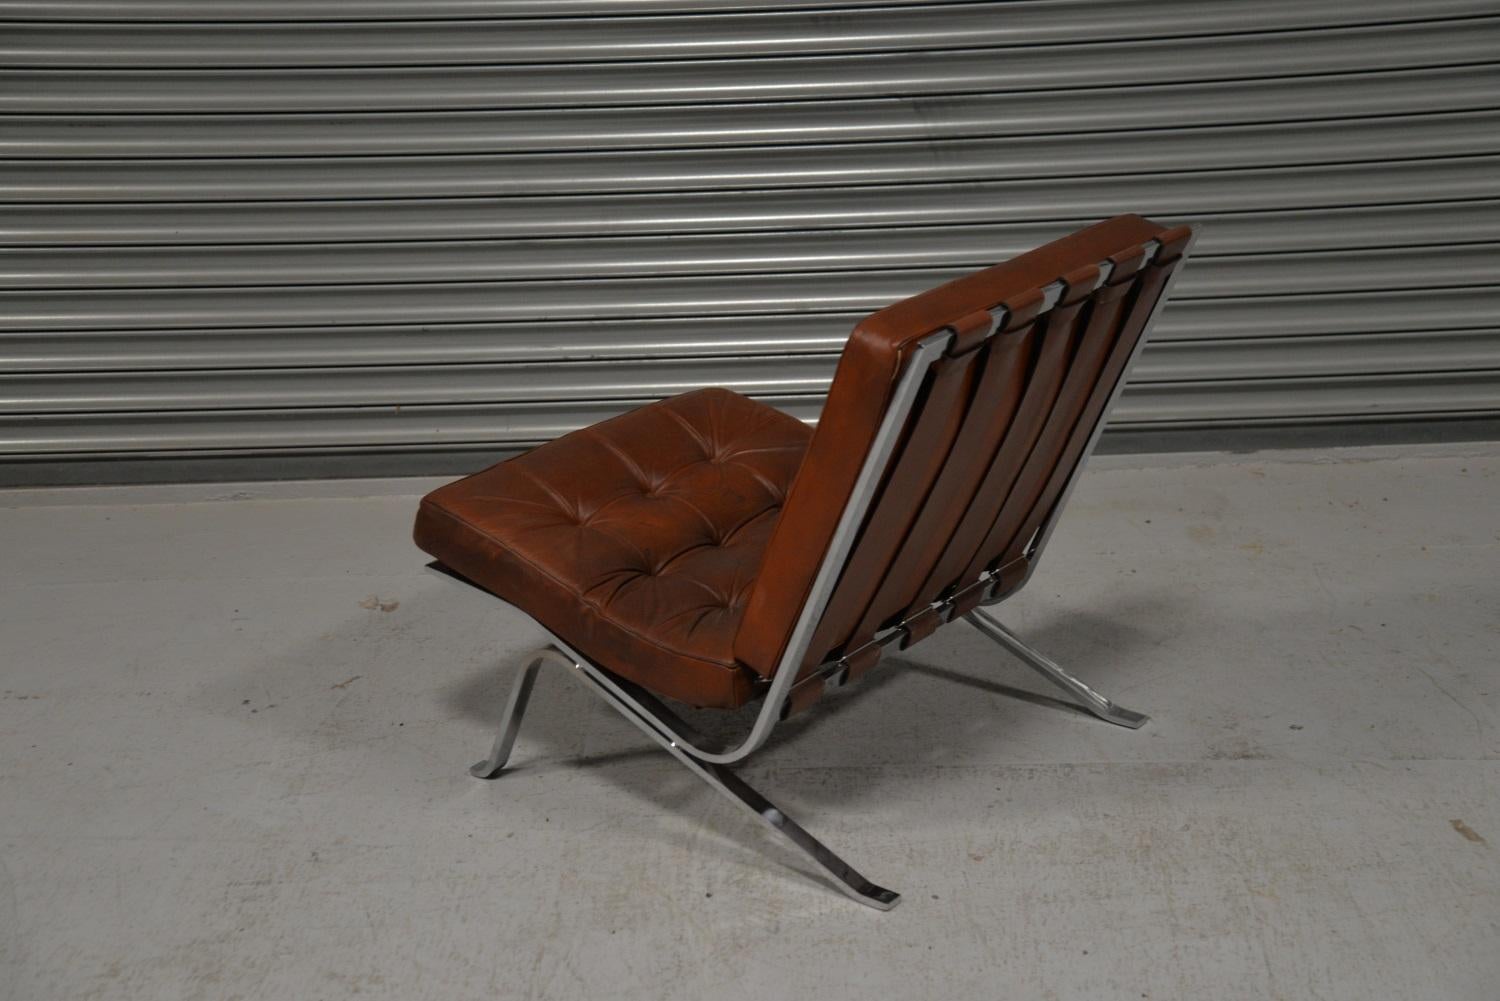 Vintage RH-301 Lounge Chair by Robert Haussmann for De Sede, Switzerland 1954 In Distressed Condition For Sale In Fen Drayton, Cambridgeshire